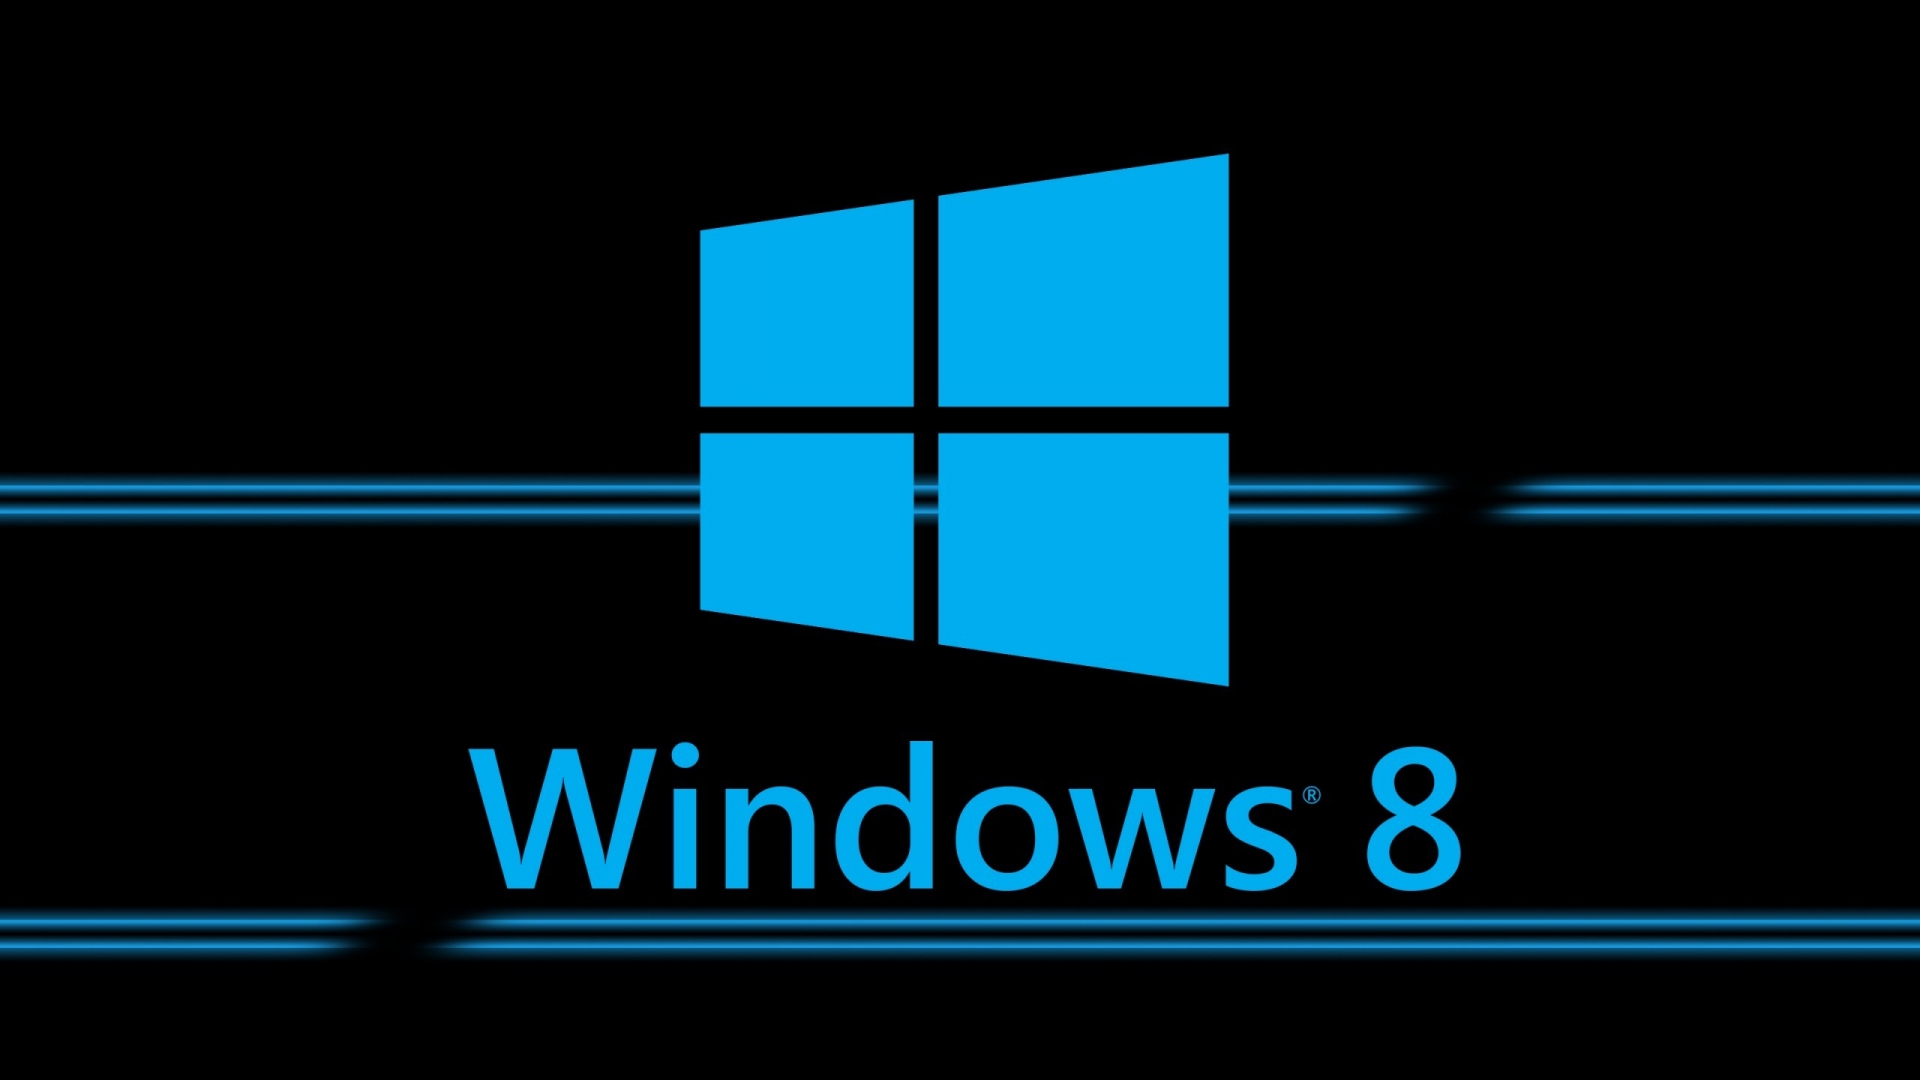 Windows 8 New for 1920 x 1080 HDTV 1080p resolution